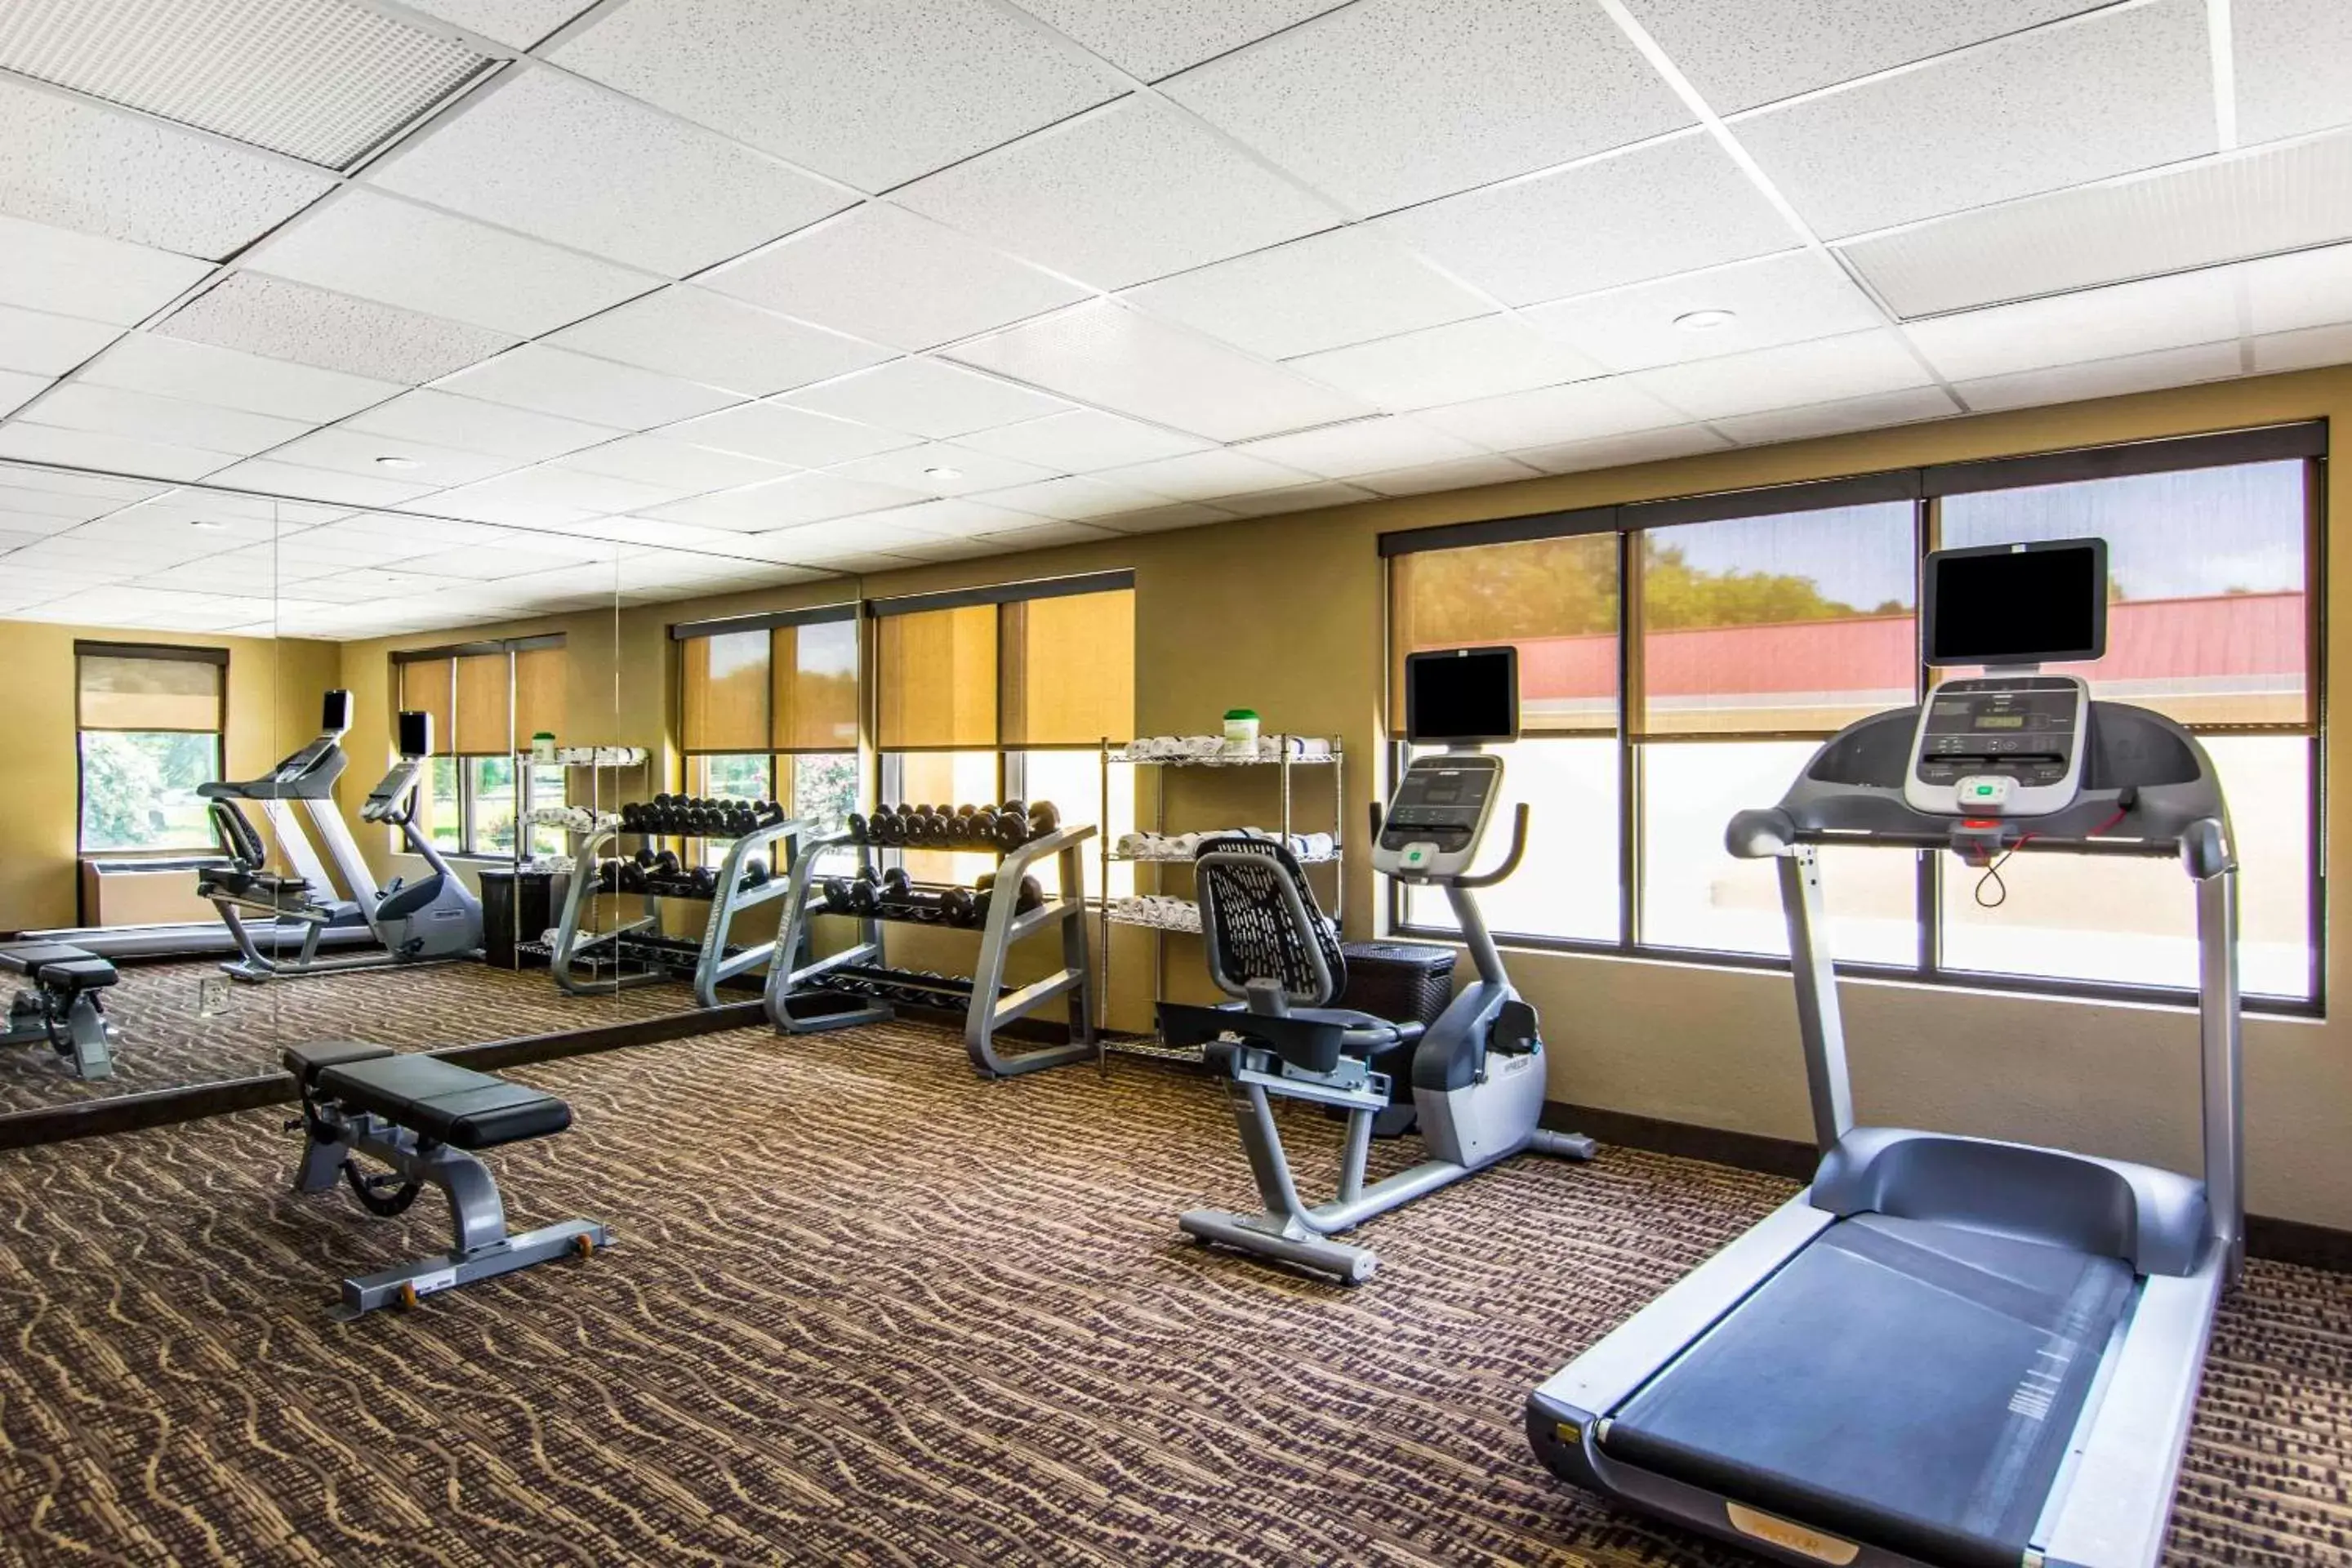 Fitness centre/facilities, Fitness Center/Facilities in Comfort Inn Newport News Williamsburg East